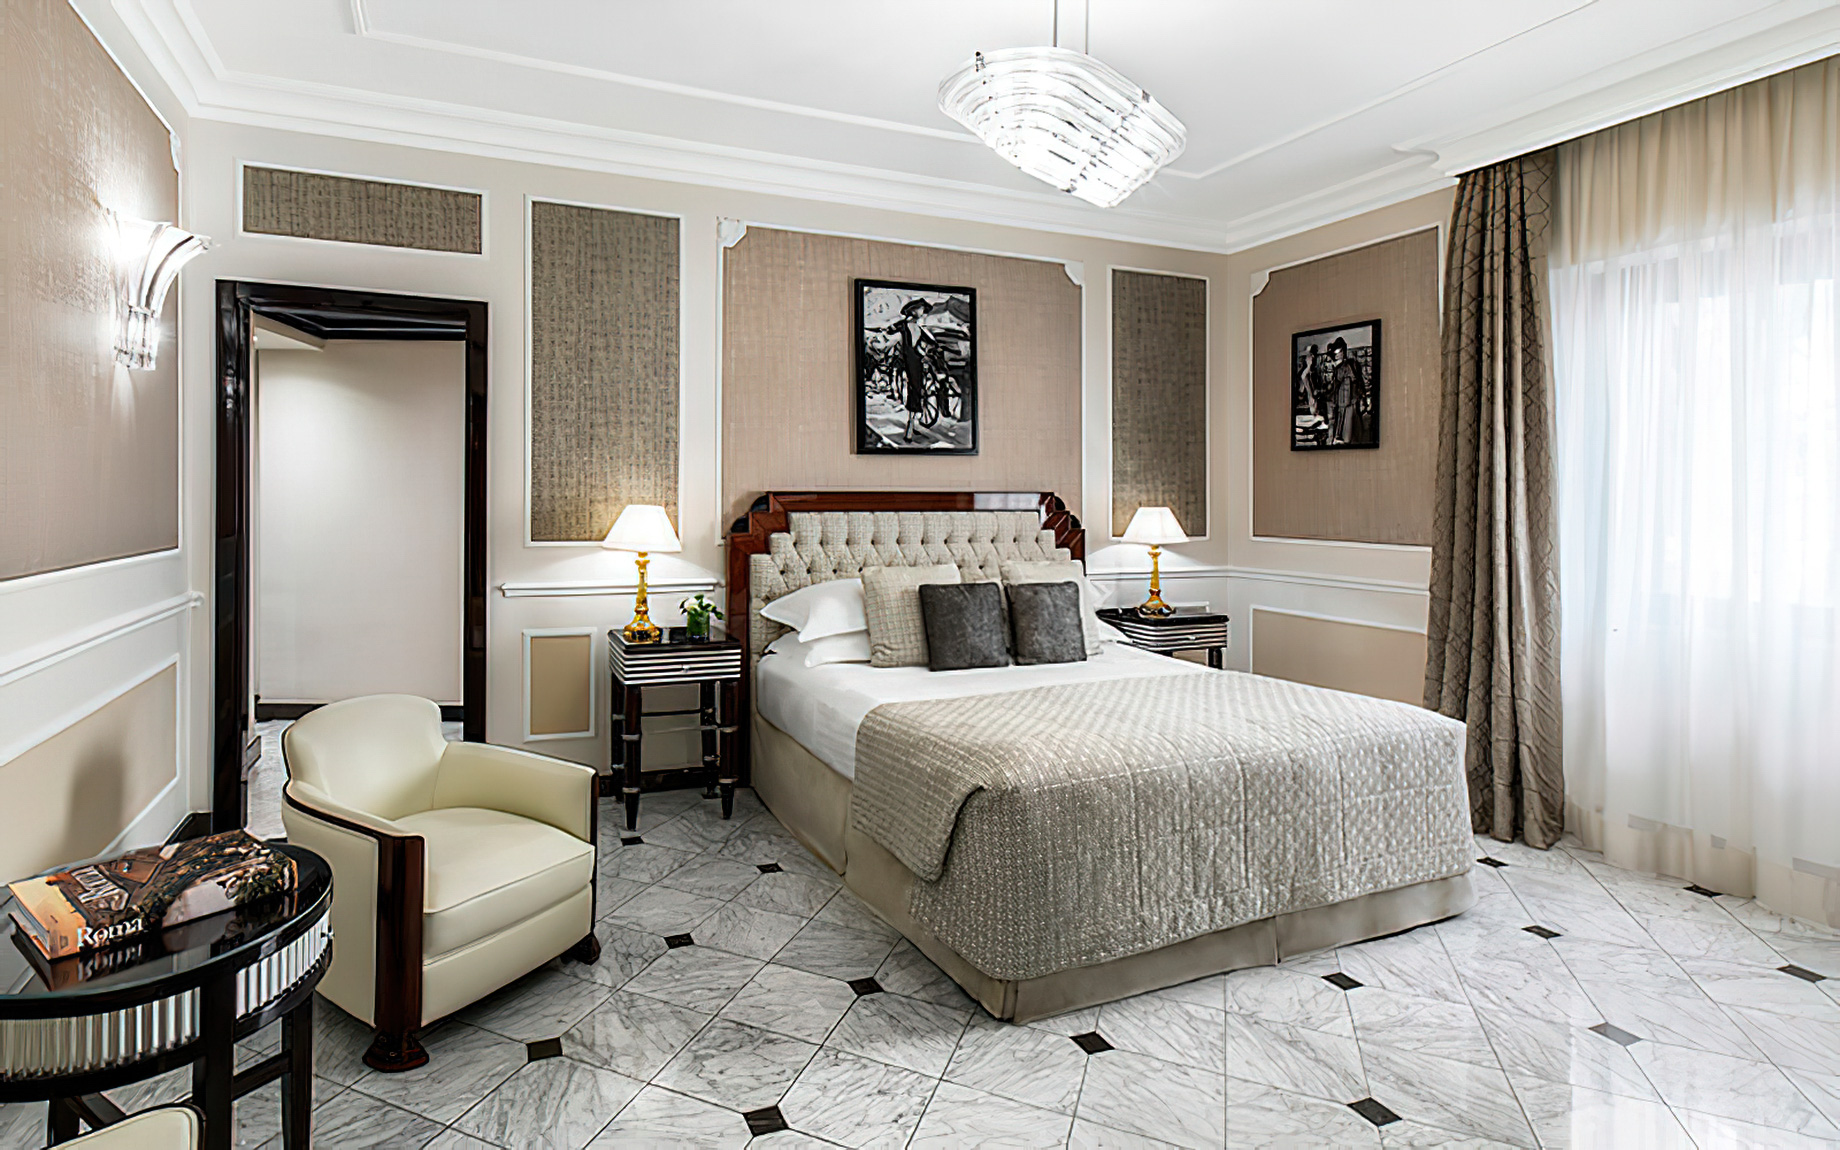 Baglioni Hotel Regina, Roma – Rome, Italy – 2 Bedroom Family Suite Bedroom